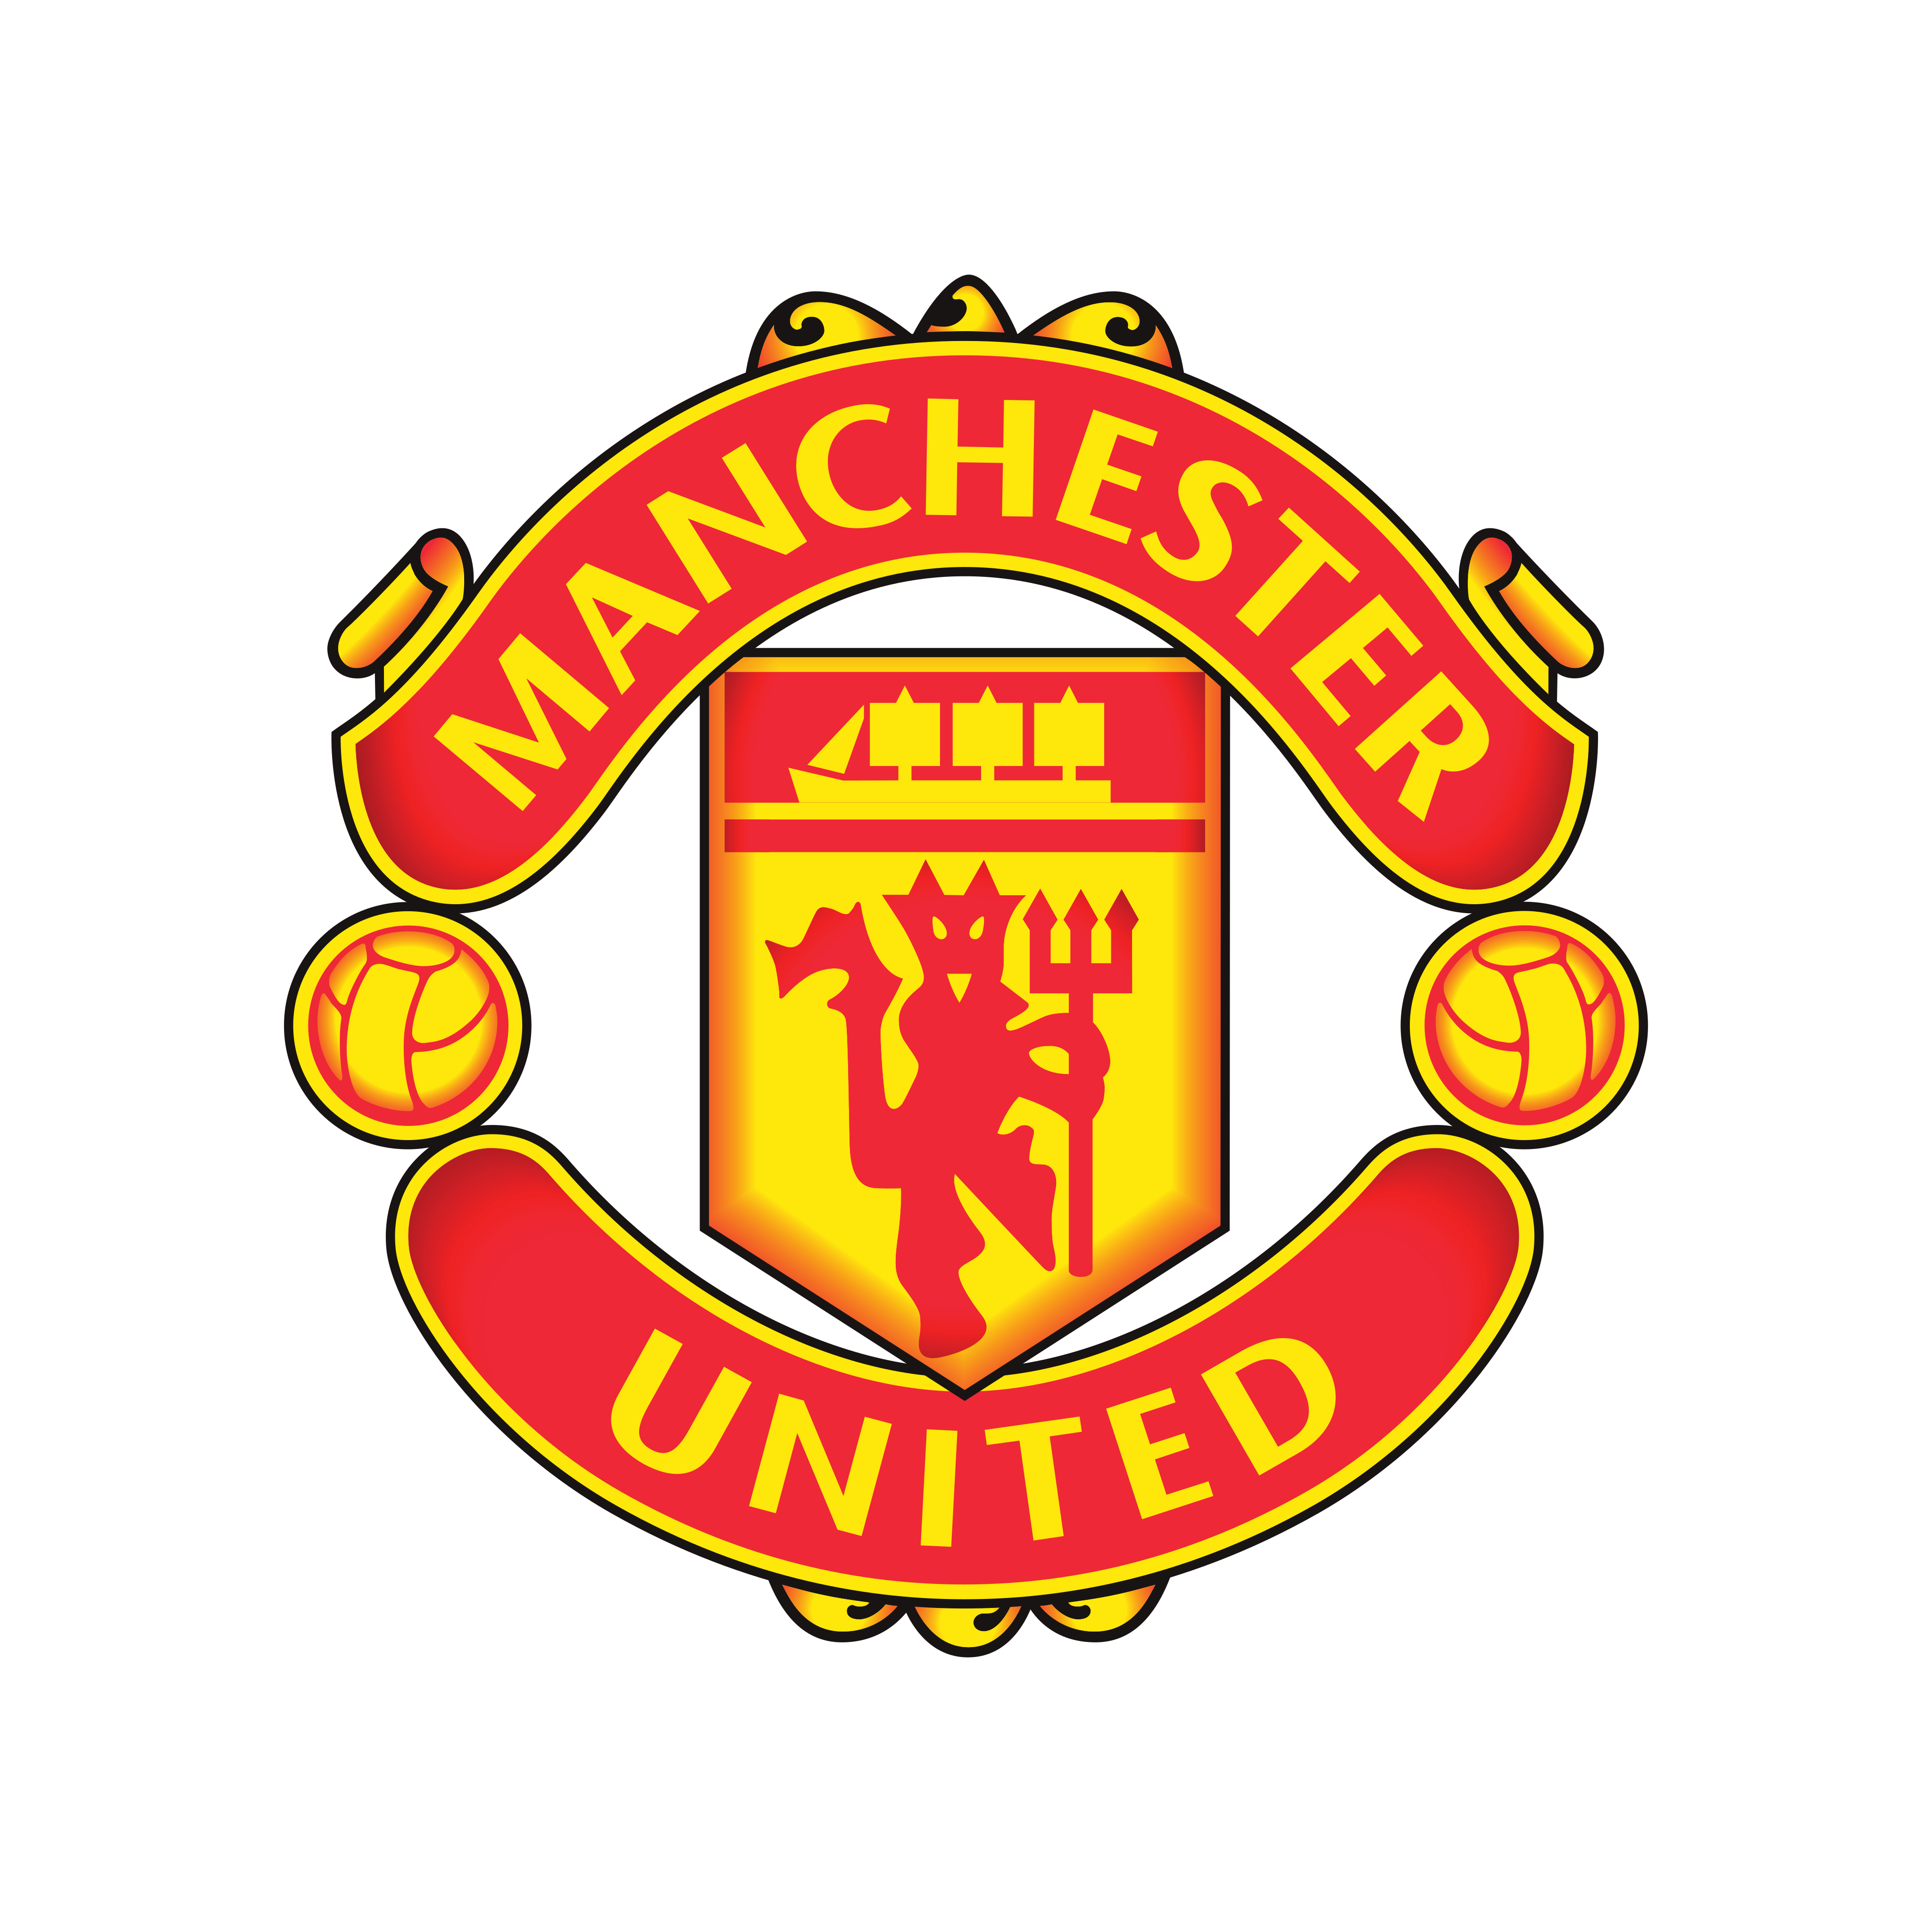 Logo de Manchester United SVG